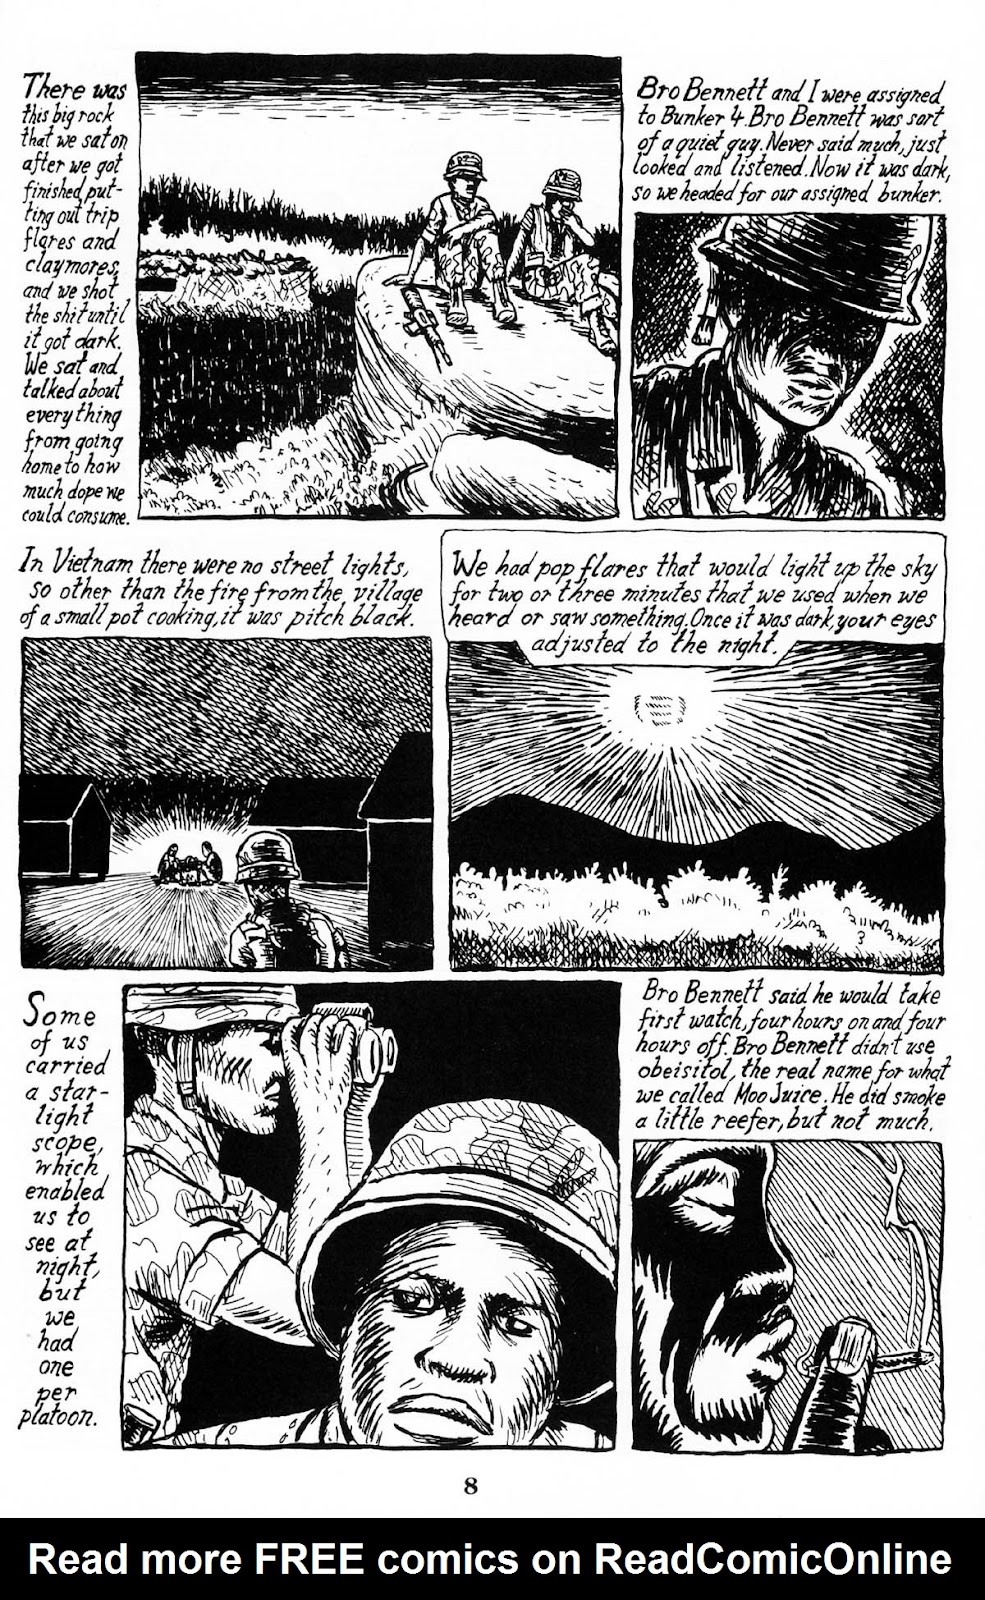 American Splendor: Unsung Hero issue 2 - Page 10